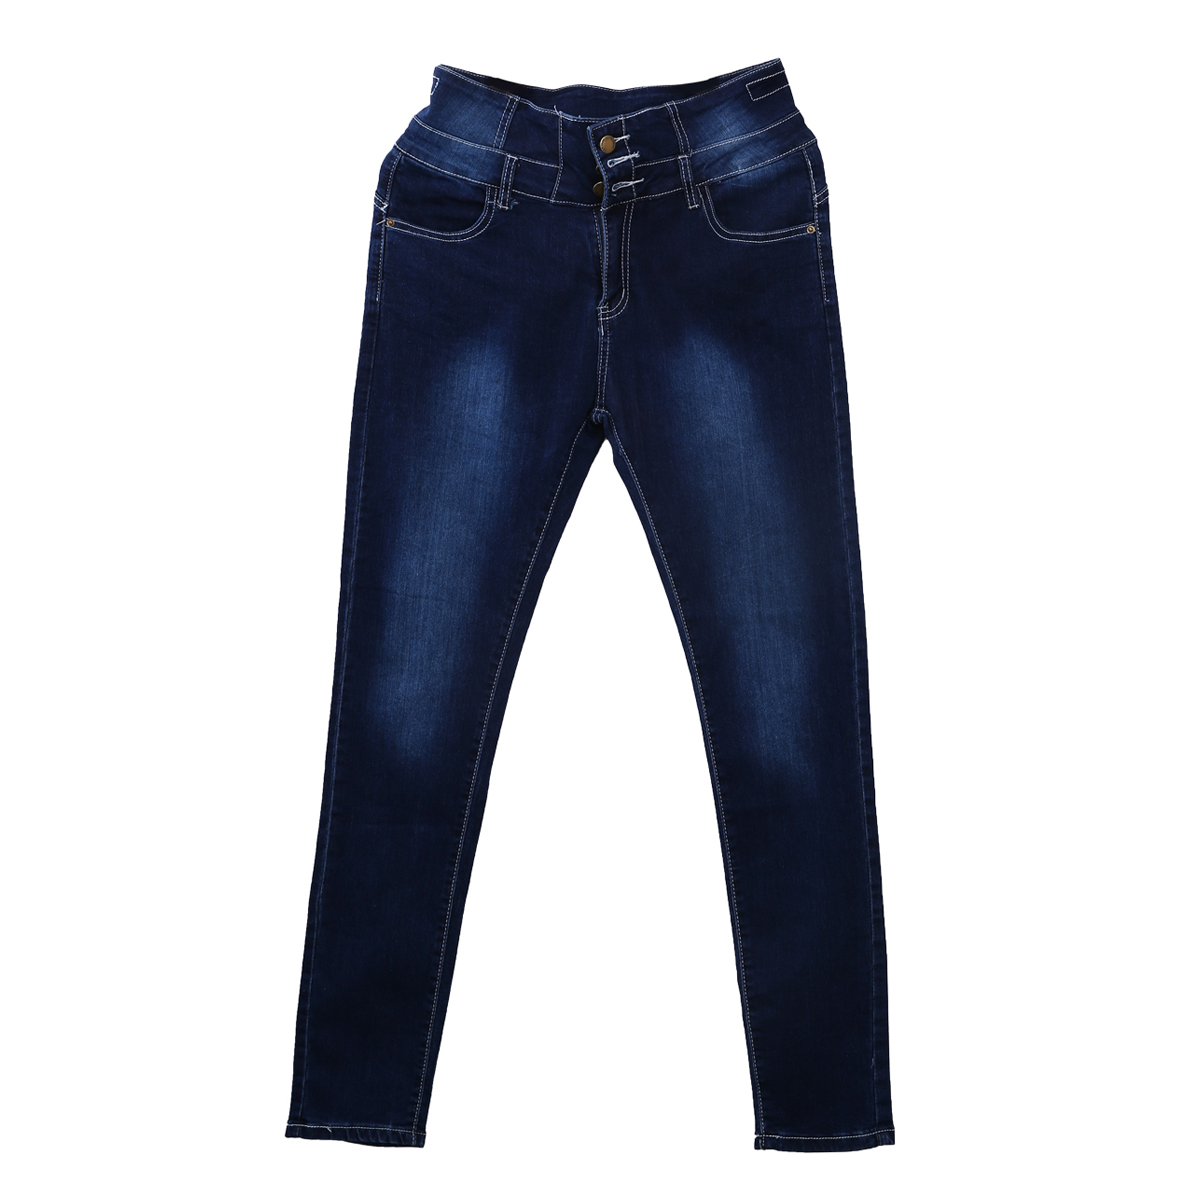 Women's high waist stretch pants denim pencil skinny jeans trousers Indigo Blue - image 3 of 5